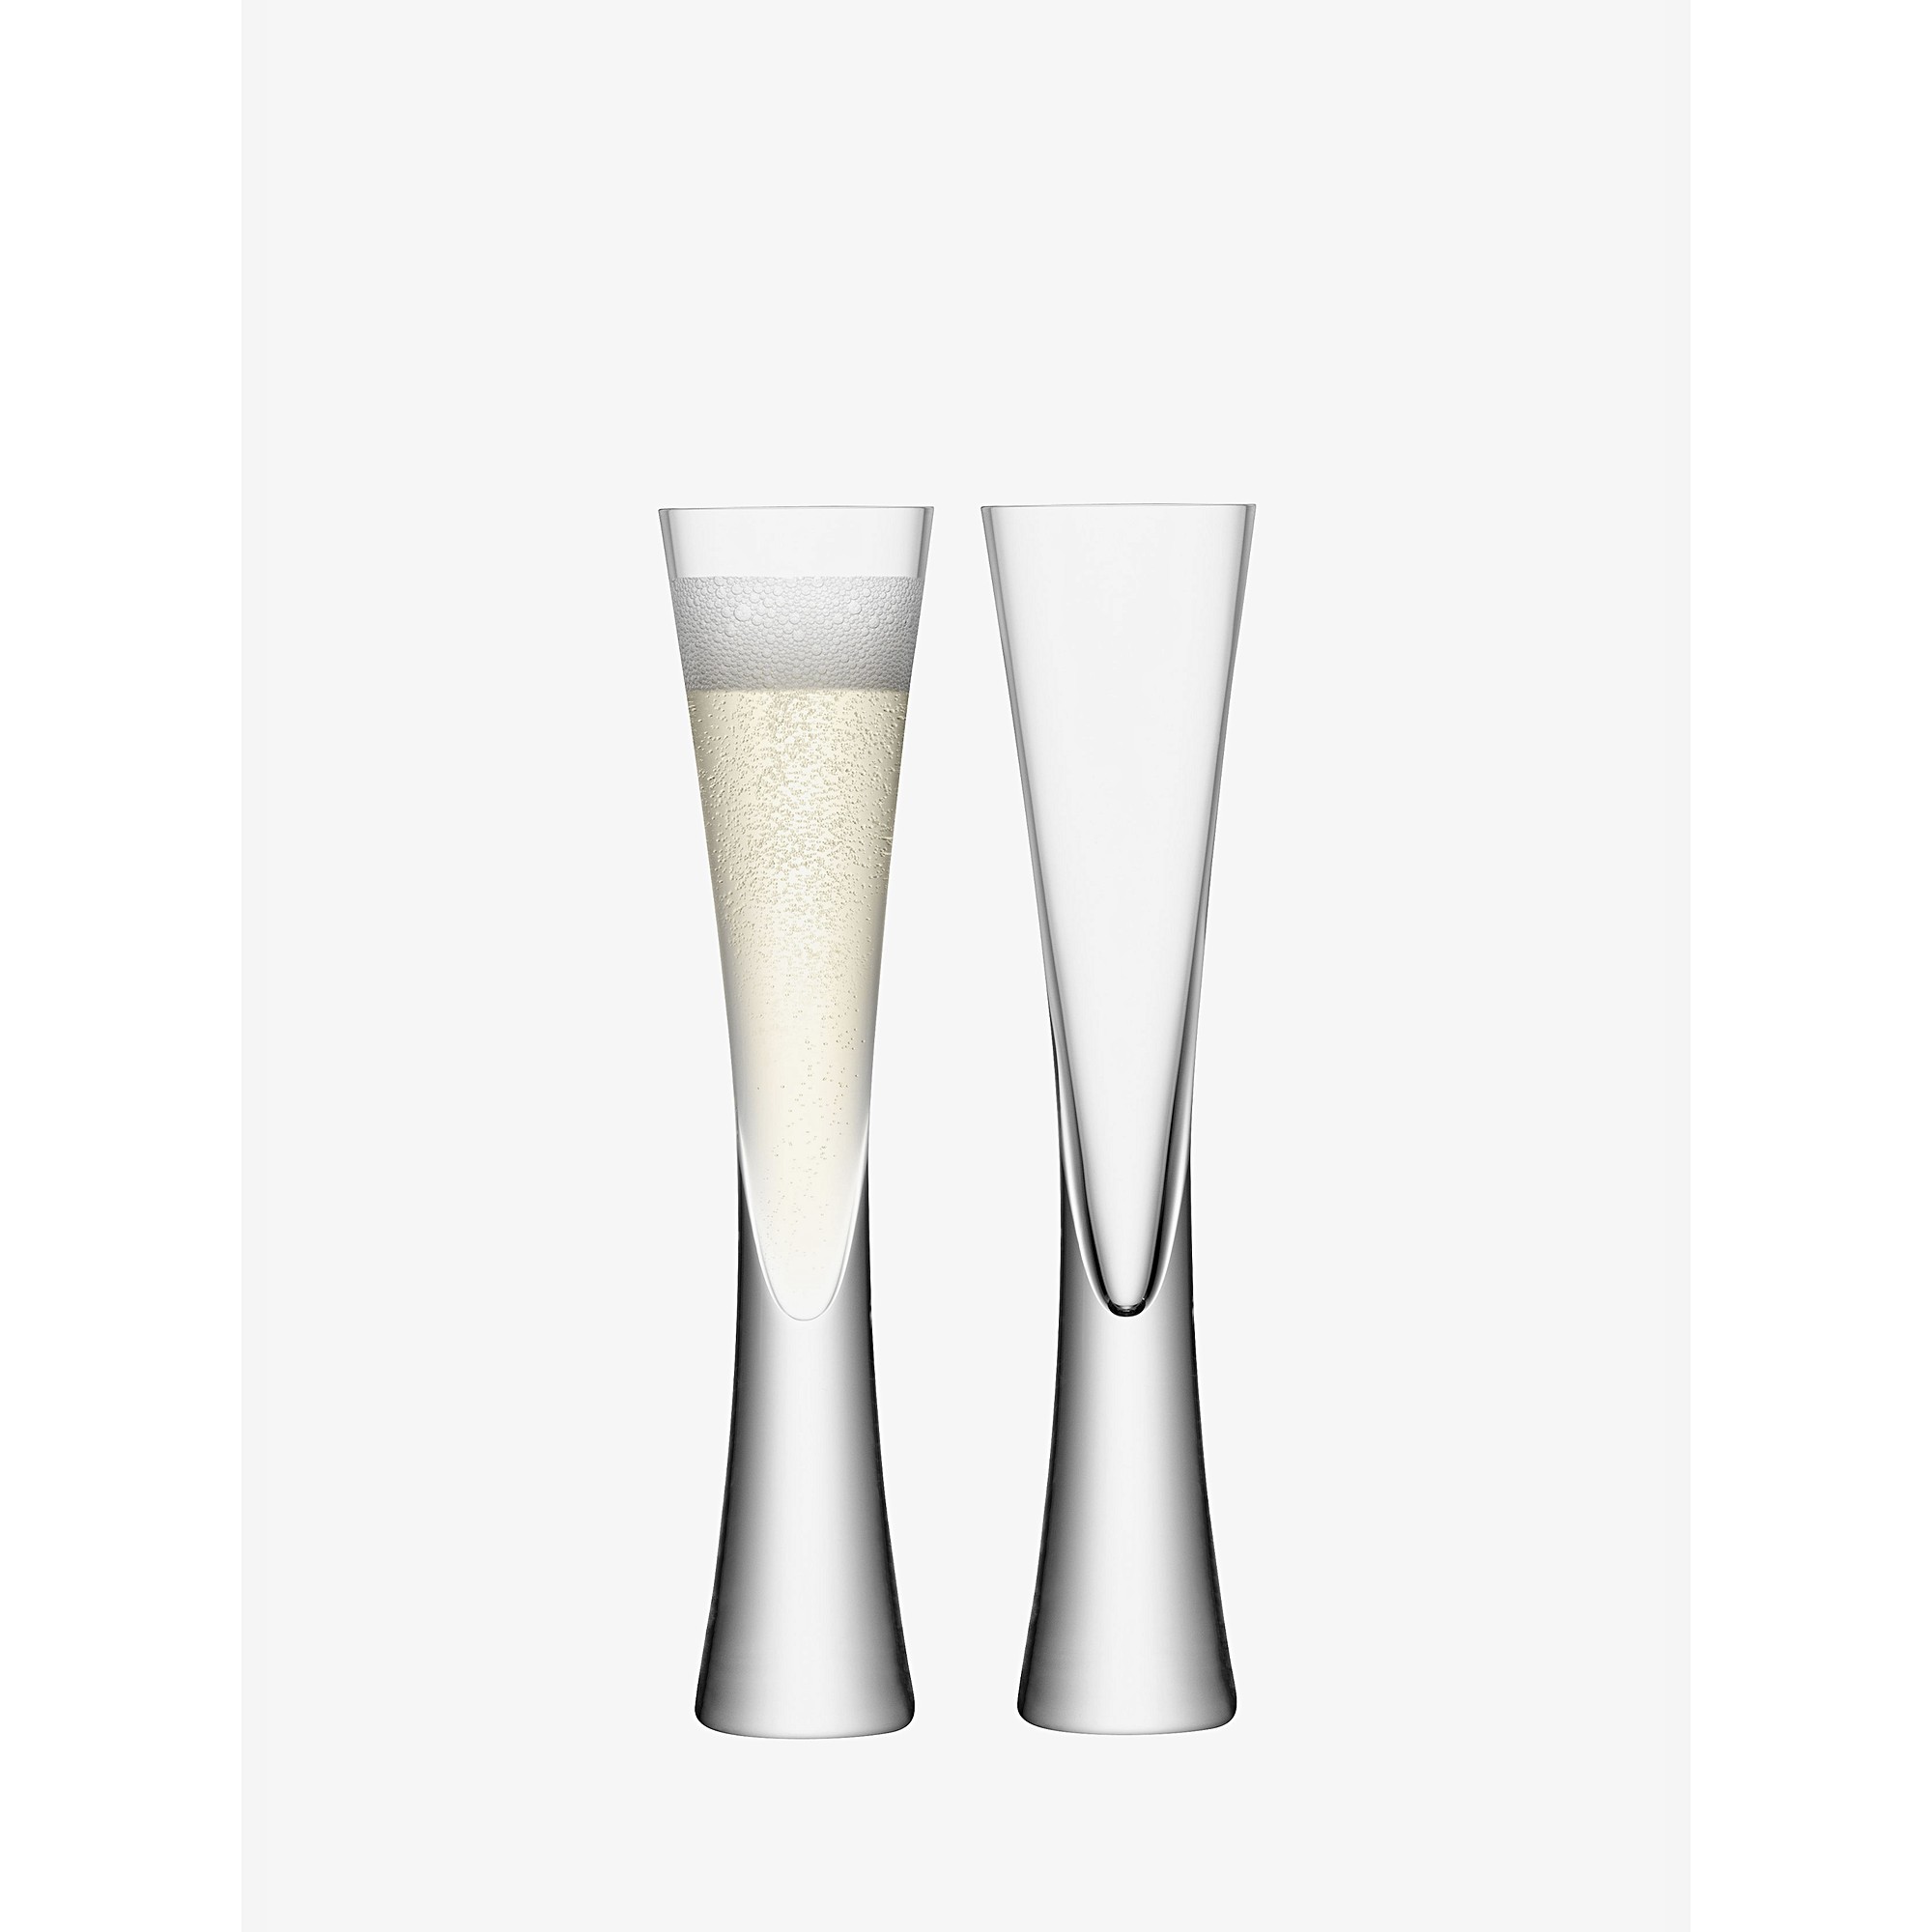 LSA MOYA Champagne Flutes 5.7oz / 170ml (Set of 2) Image